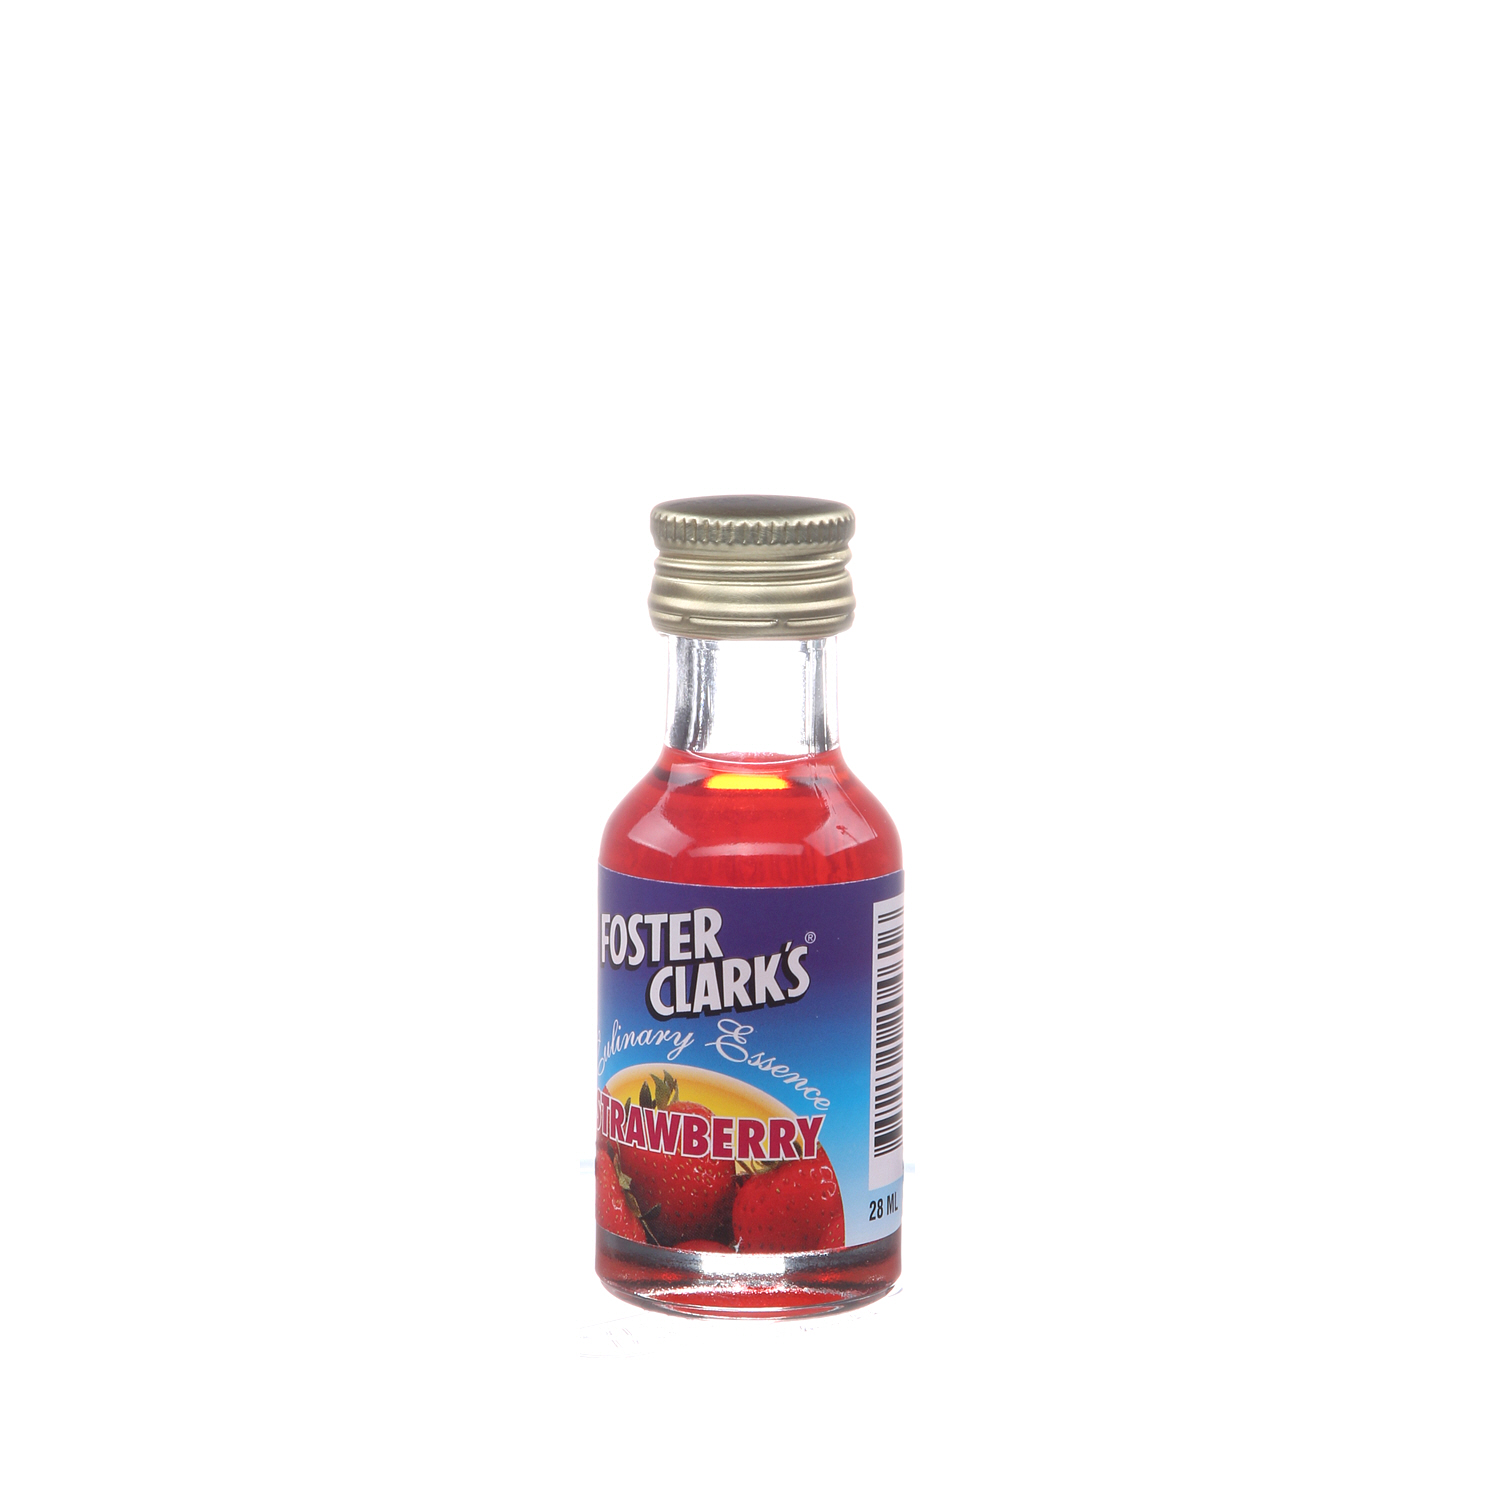 Foster Clarks Strawberry Essence 28 ml